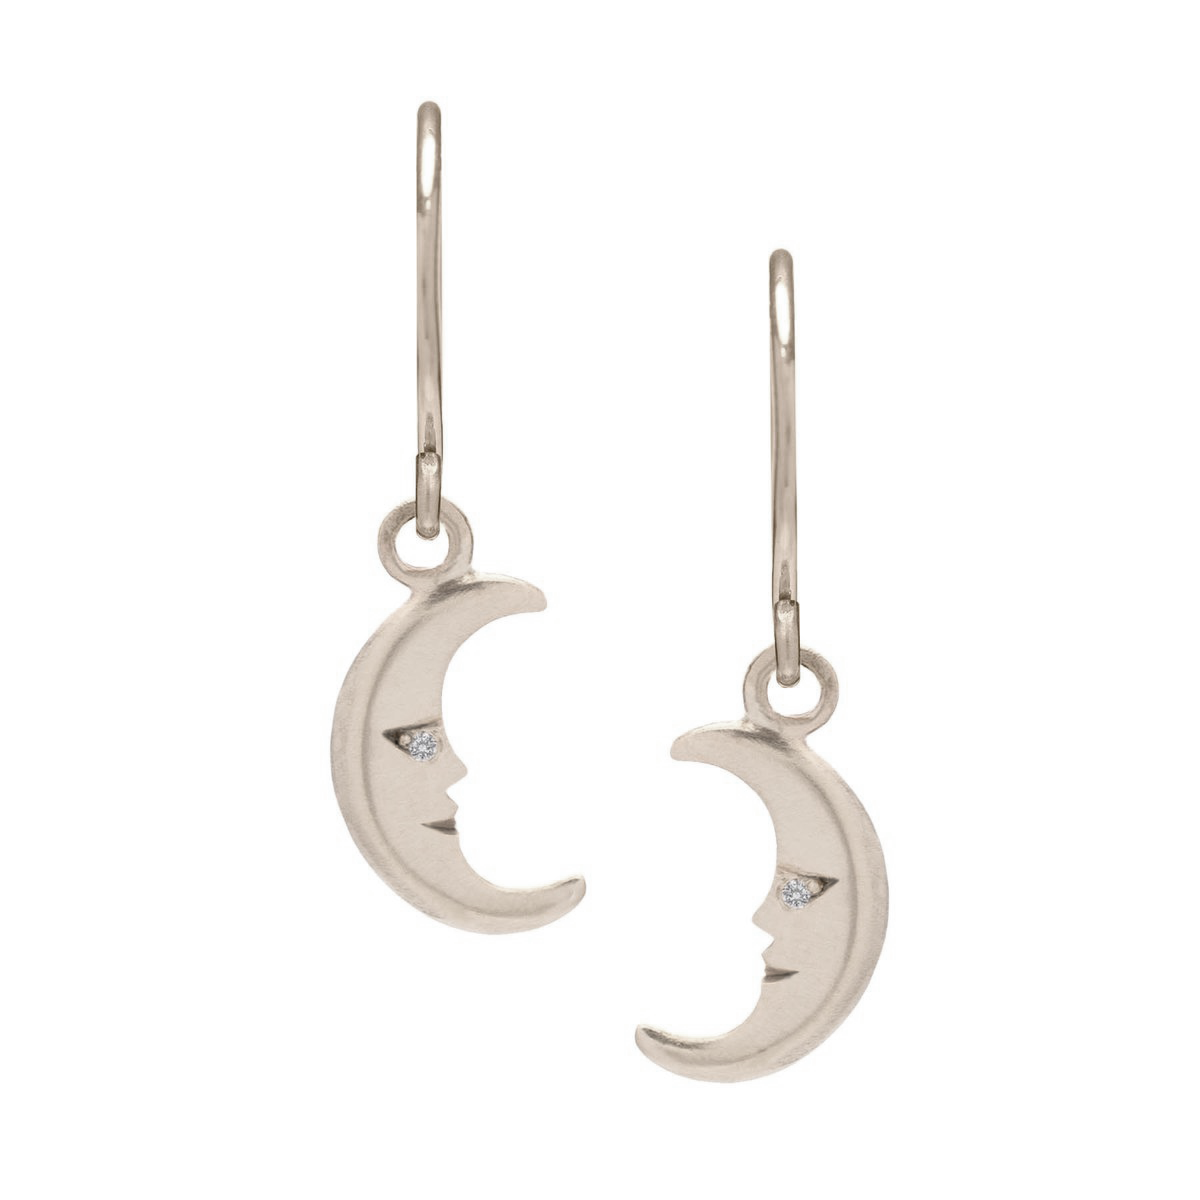 Moon Charm Earrings